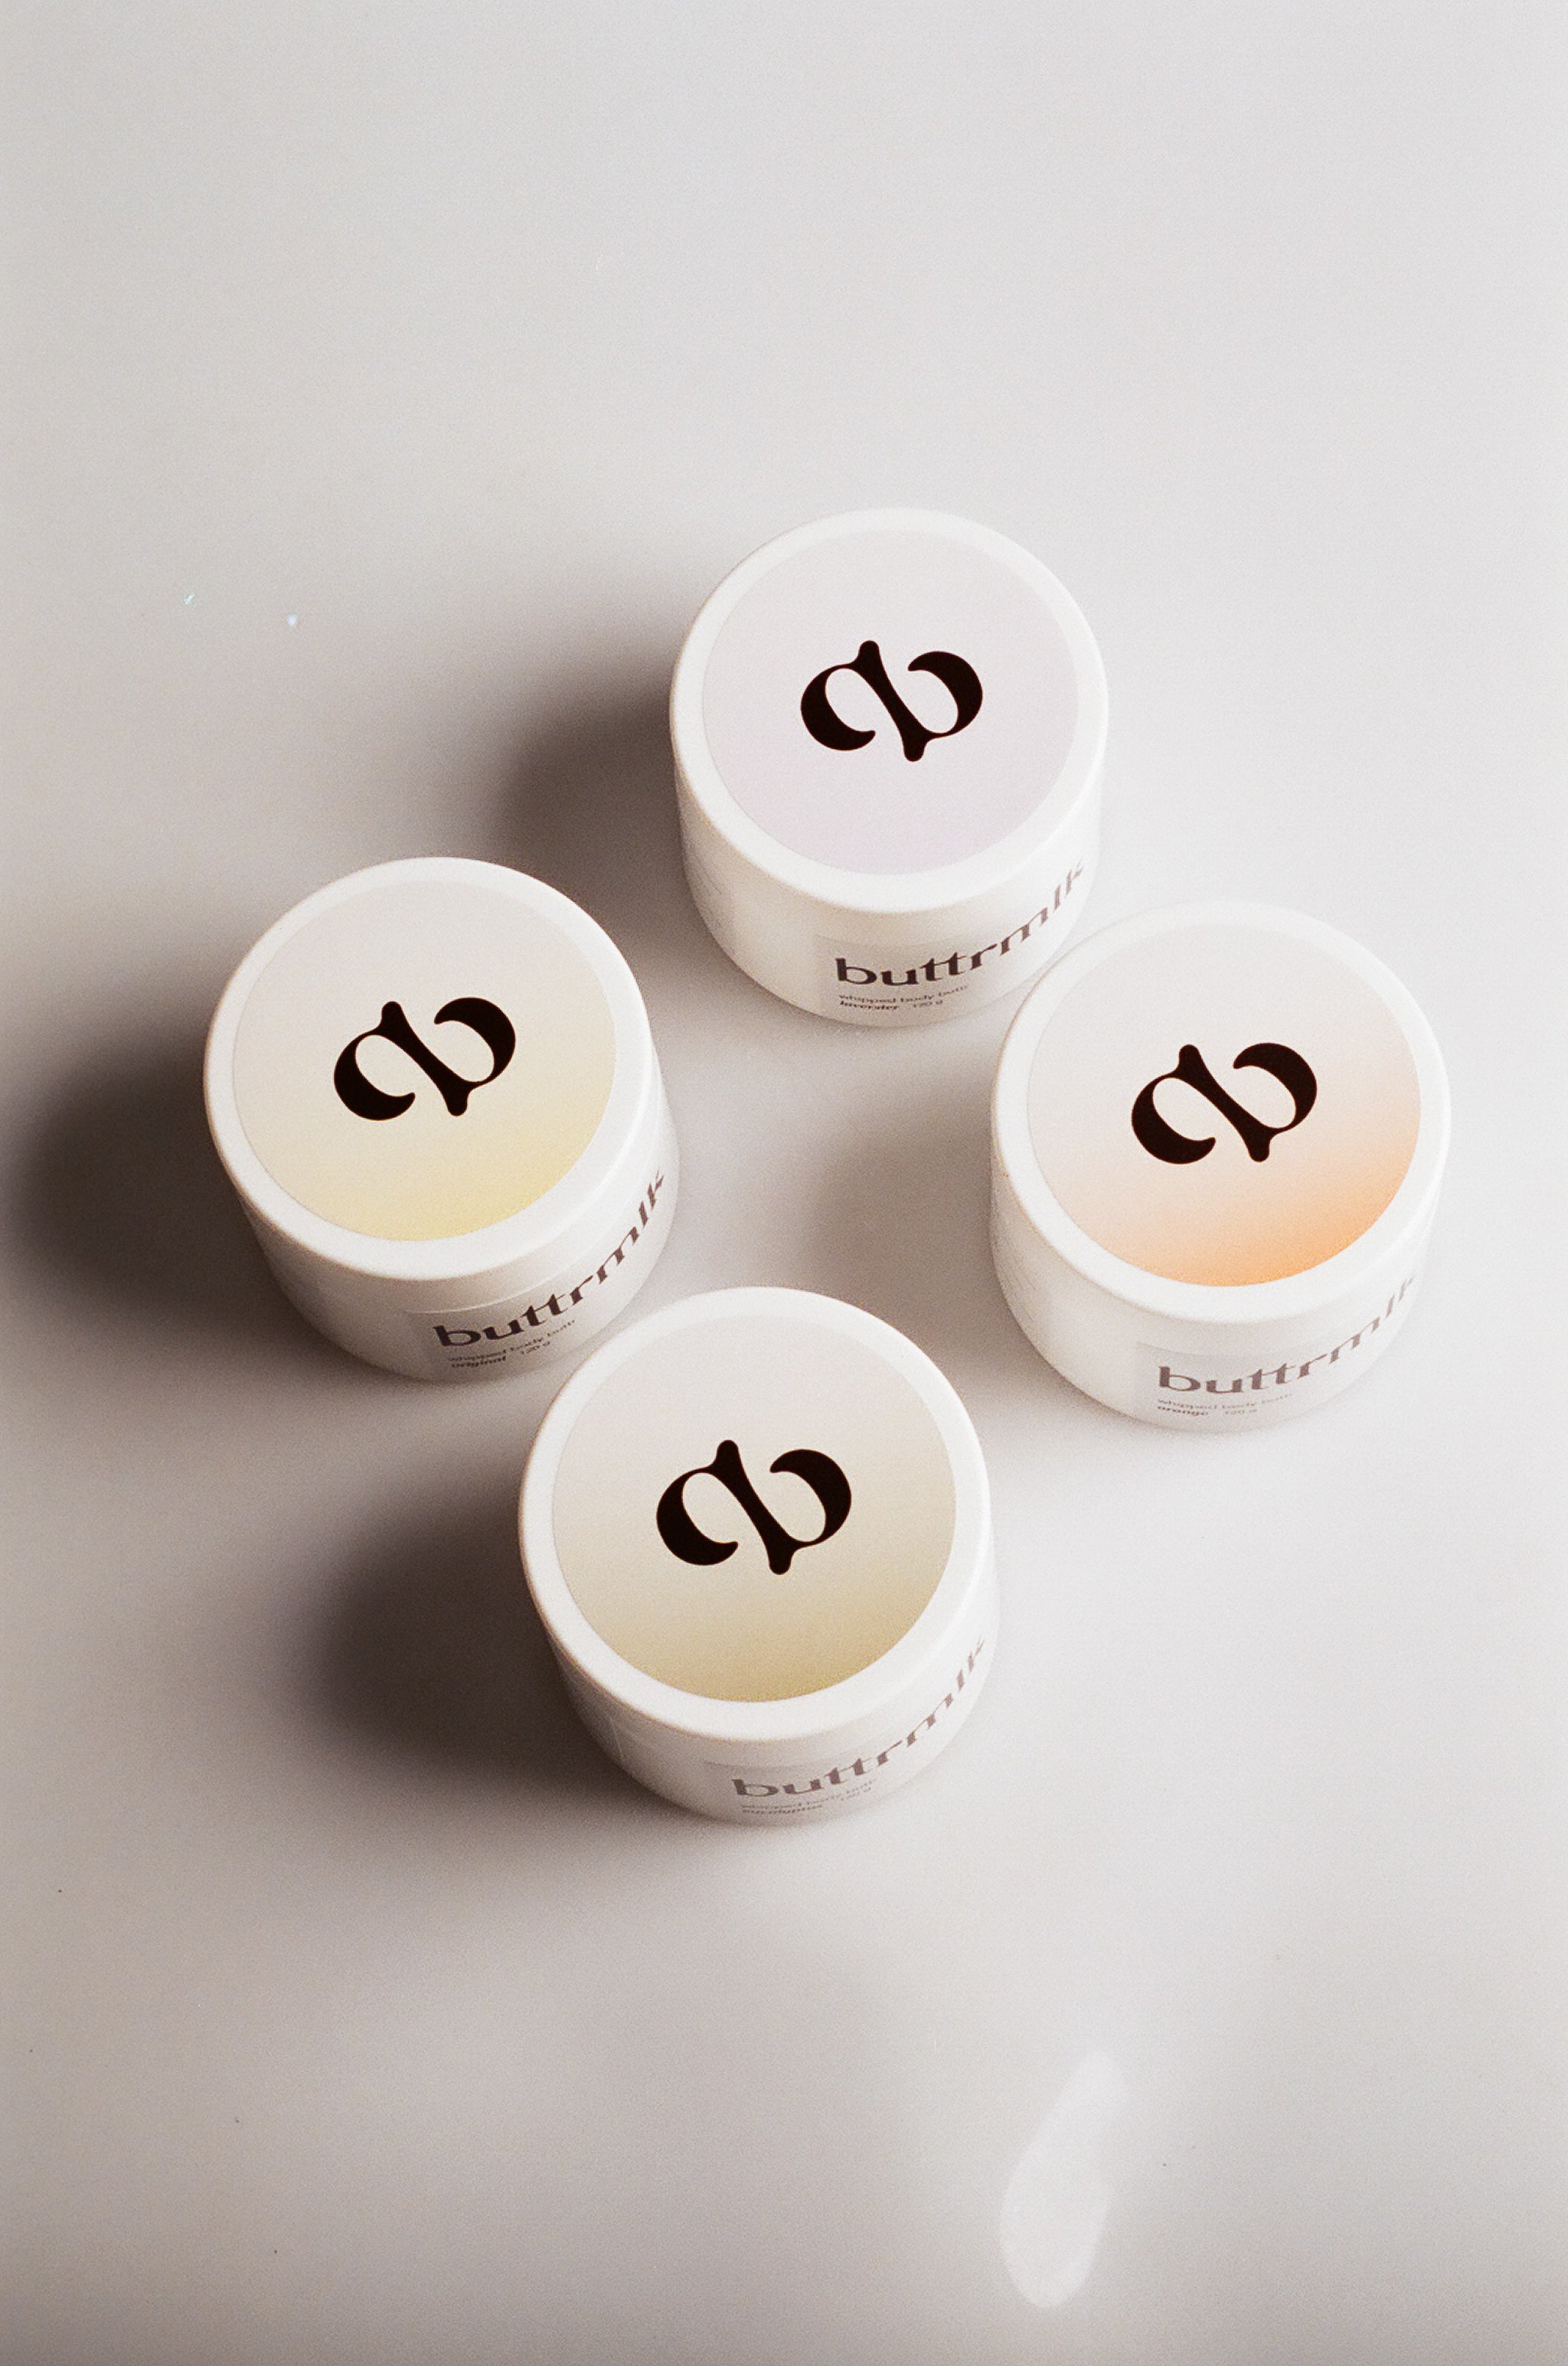 Chanel Hydra Beauty Nutrition Nourishing Lip Care By Chanel for Unisex 0.35  Oz Cream 0.35 Oz